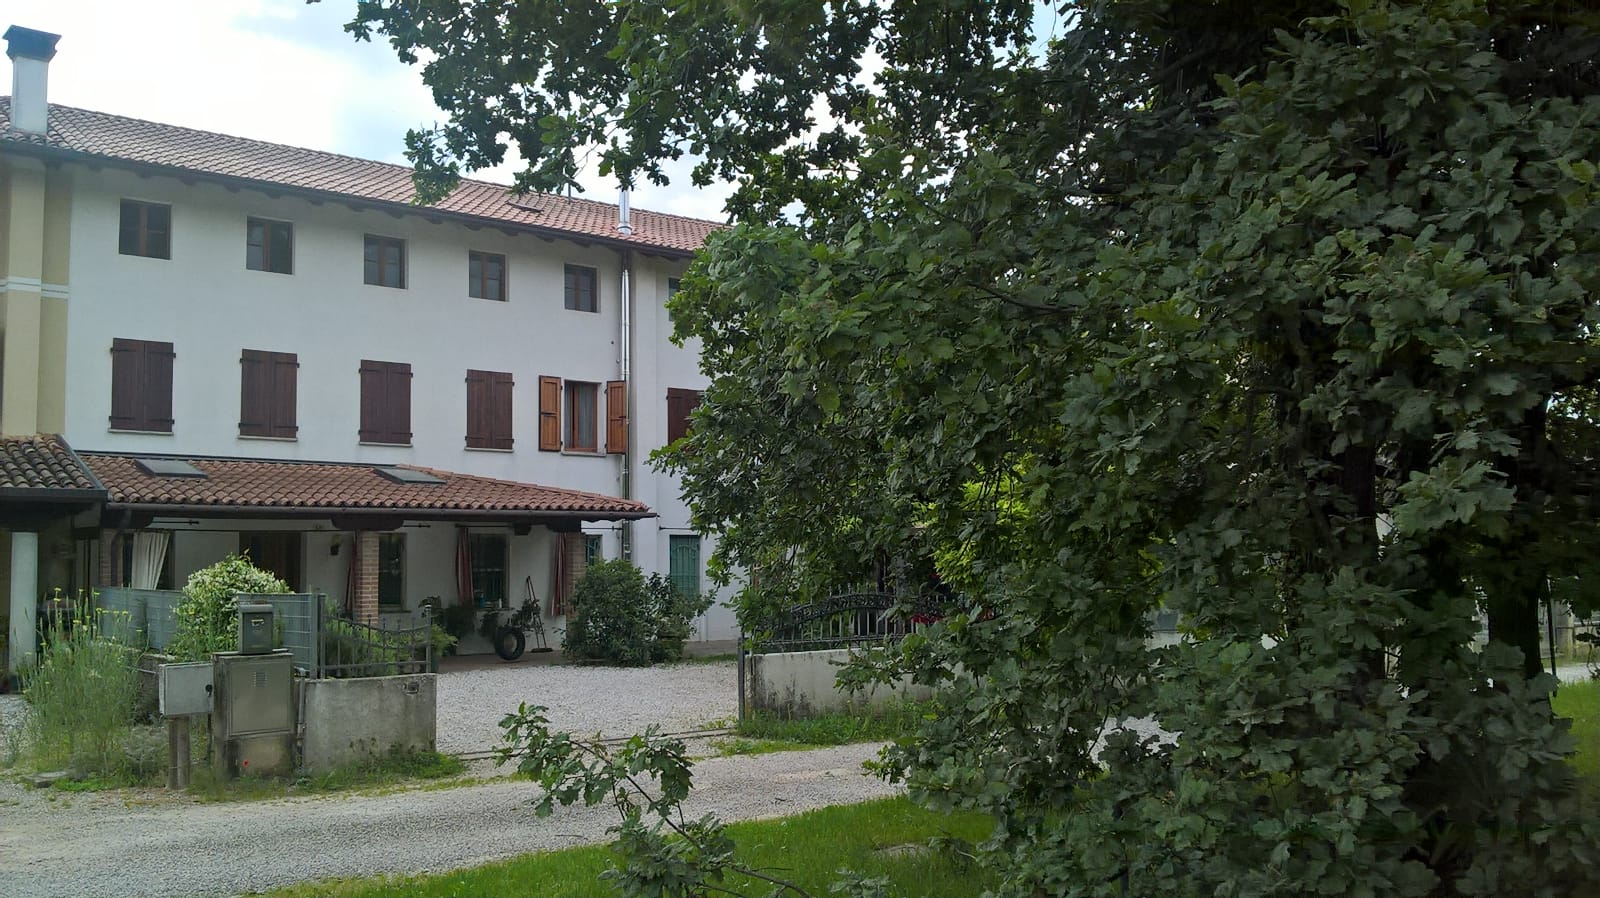 The Beltrame home in Via Umberto 1, Talmassons